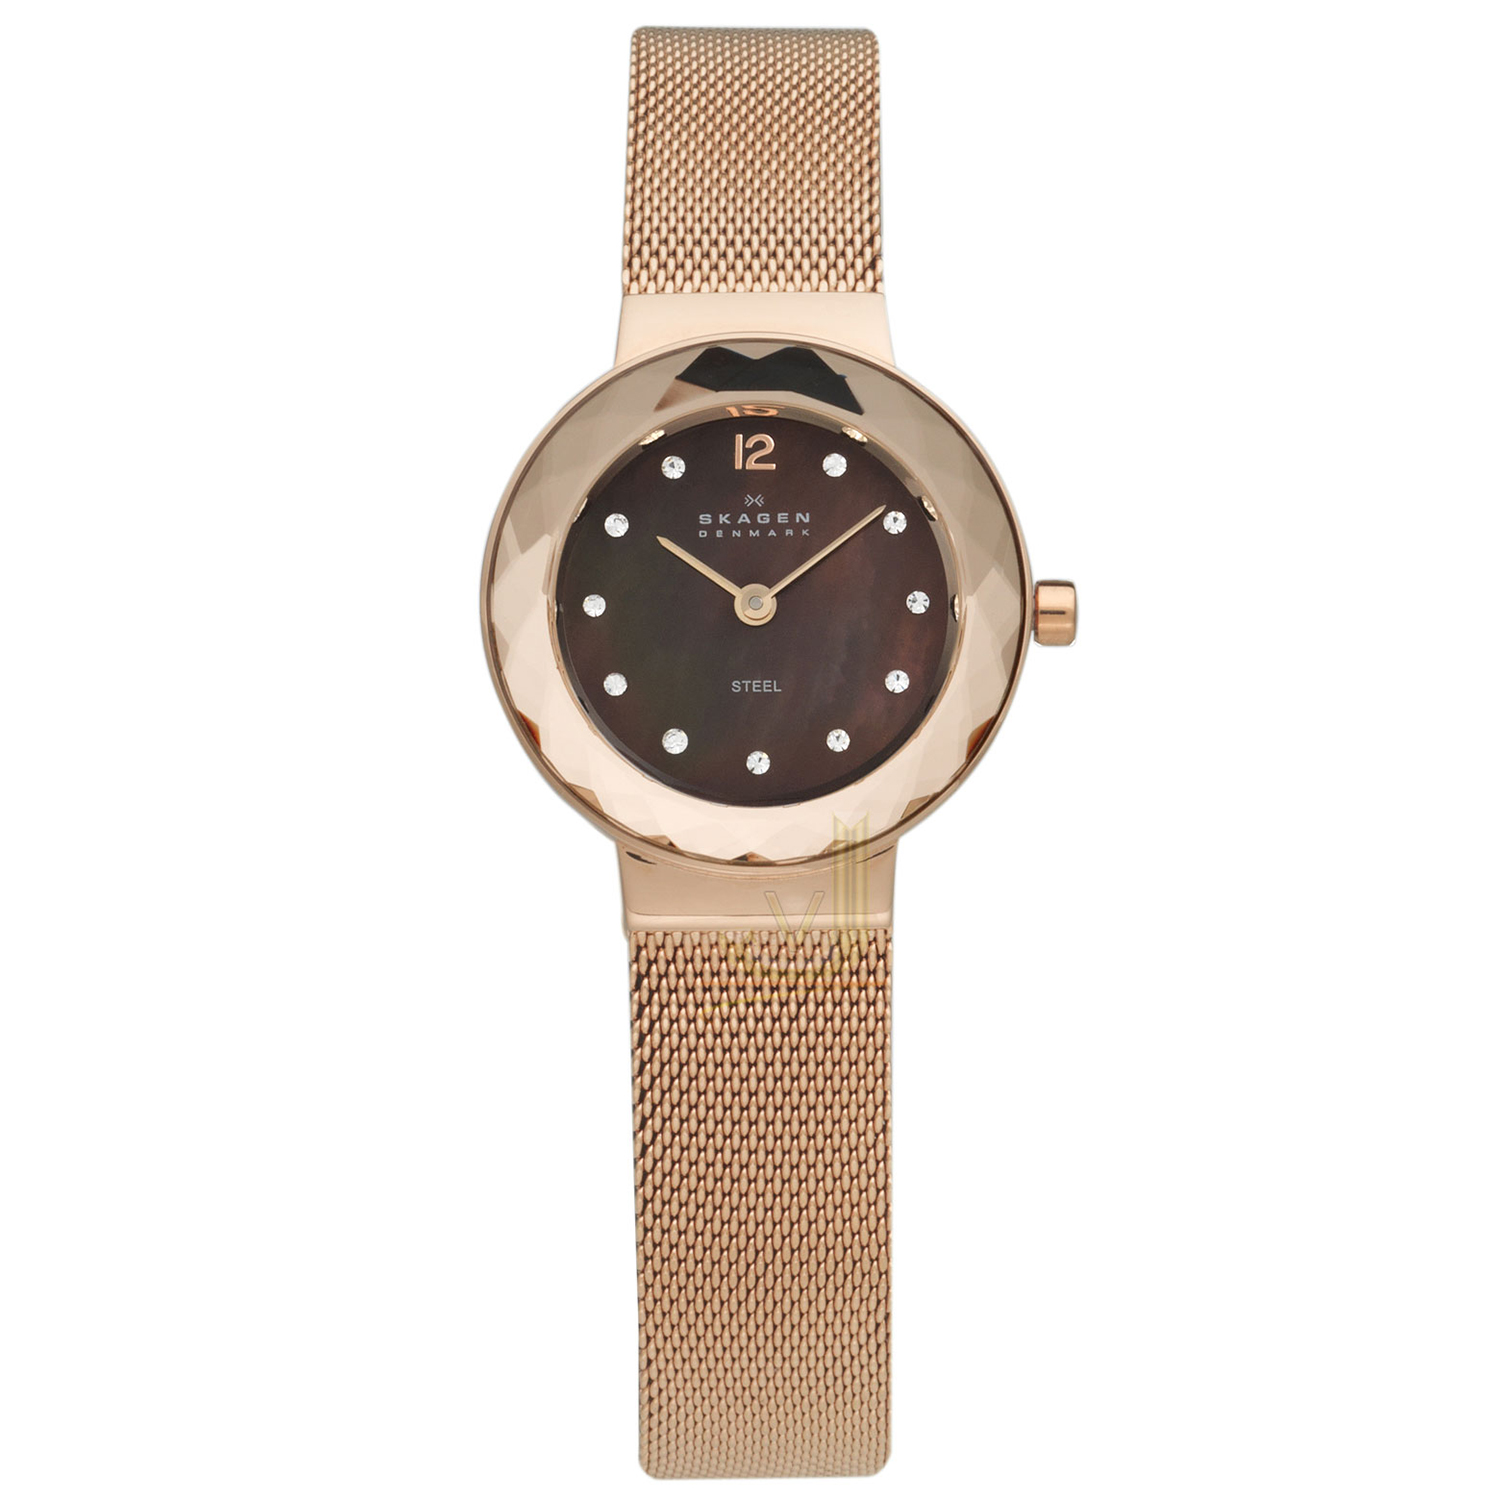 456SRR1 Skagen Ladies Watch - Vinson Jewellers